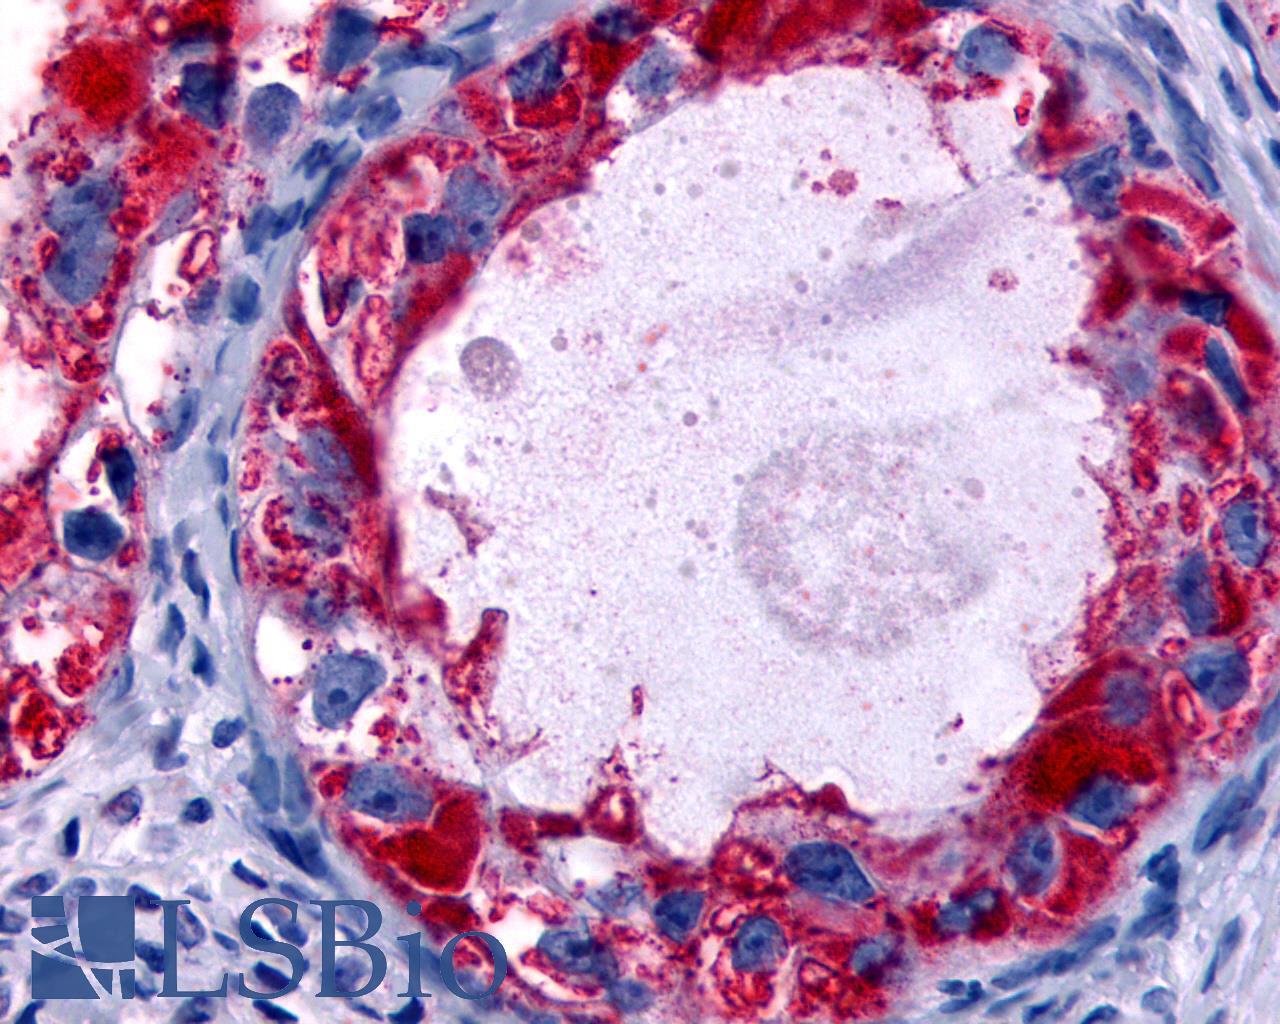 HRH4 / Histamine H4 Receptor Antibody - Ovary, carcinoma